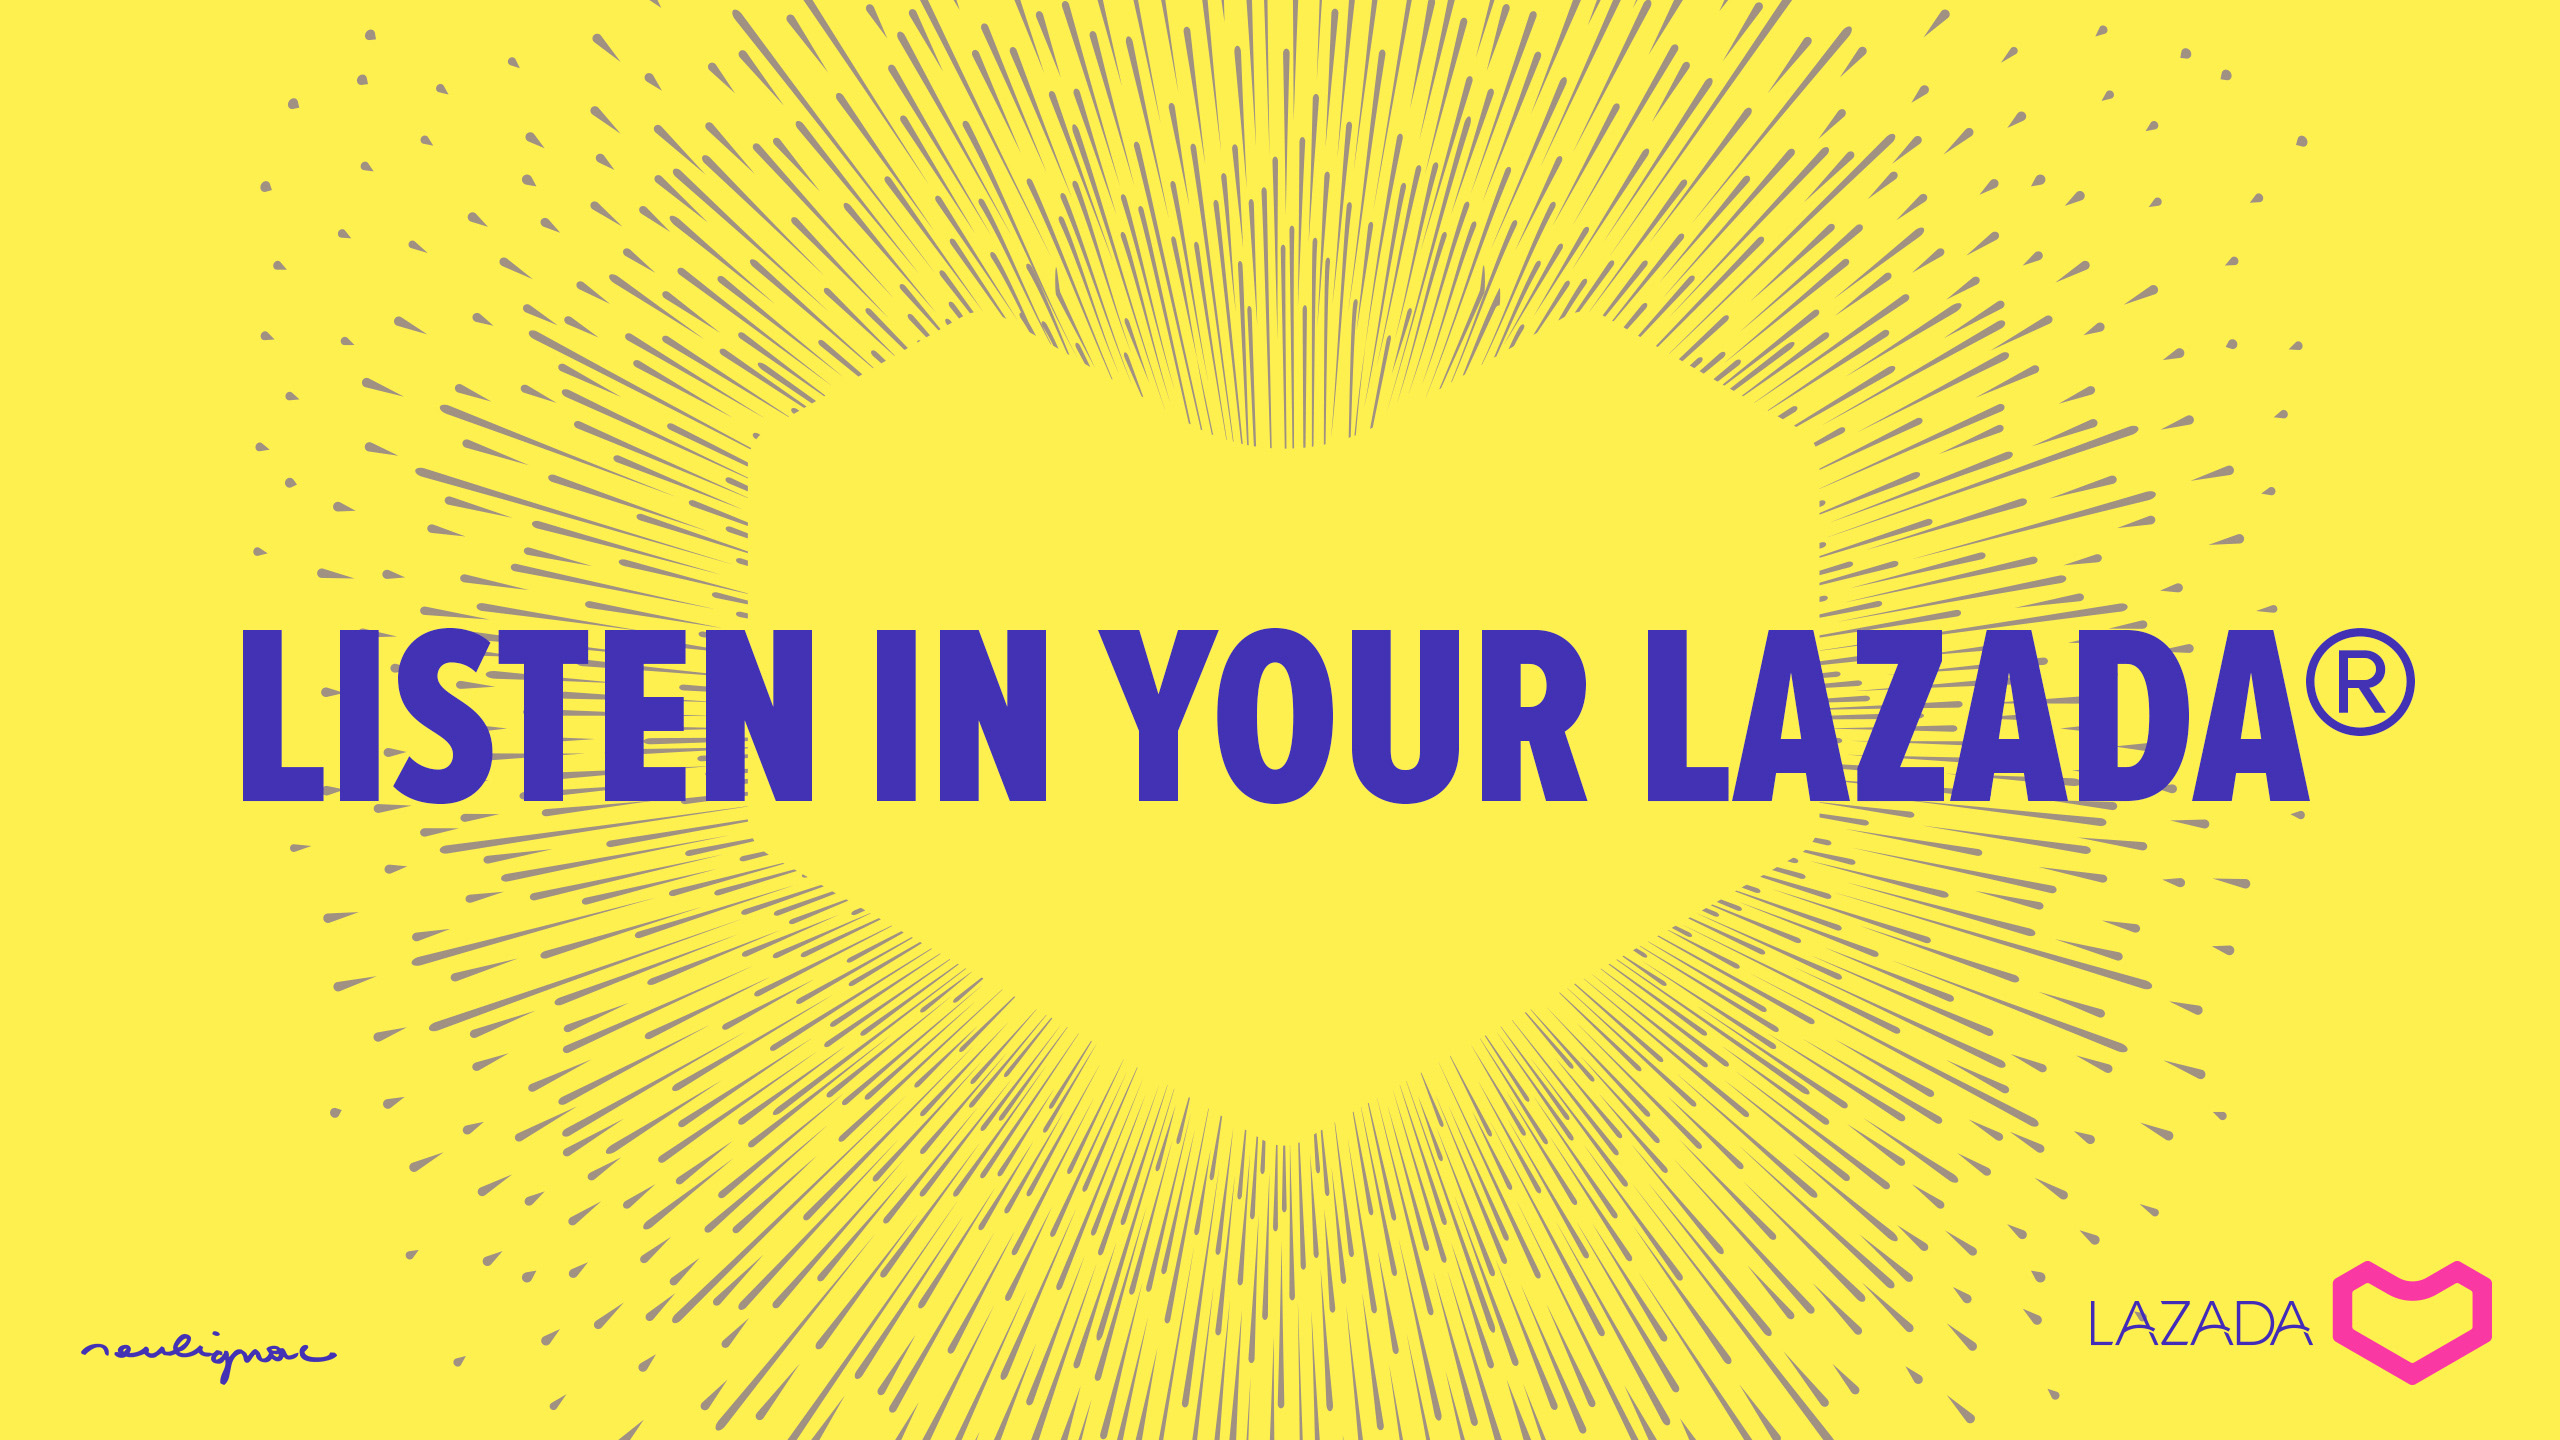 LAZADA Group - Digital Campaign - LISTEN IN YOUR LAZADA  - Francois Soulignac - Digital Creative & Art Director - MADJOR Labbrand Shanghai